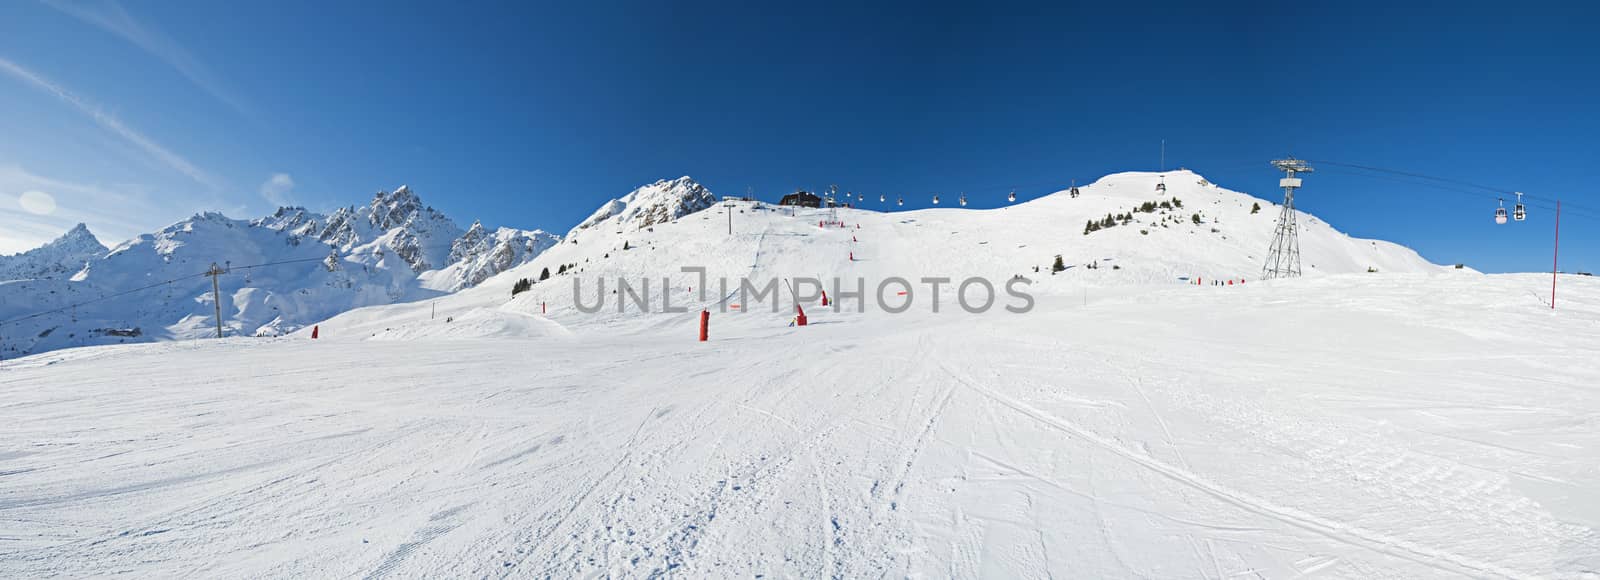 Panoramic landscape up a large ski slope piste in winter alpine mountain resort